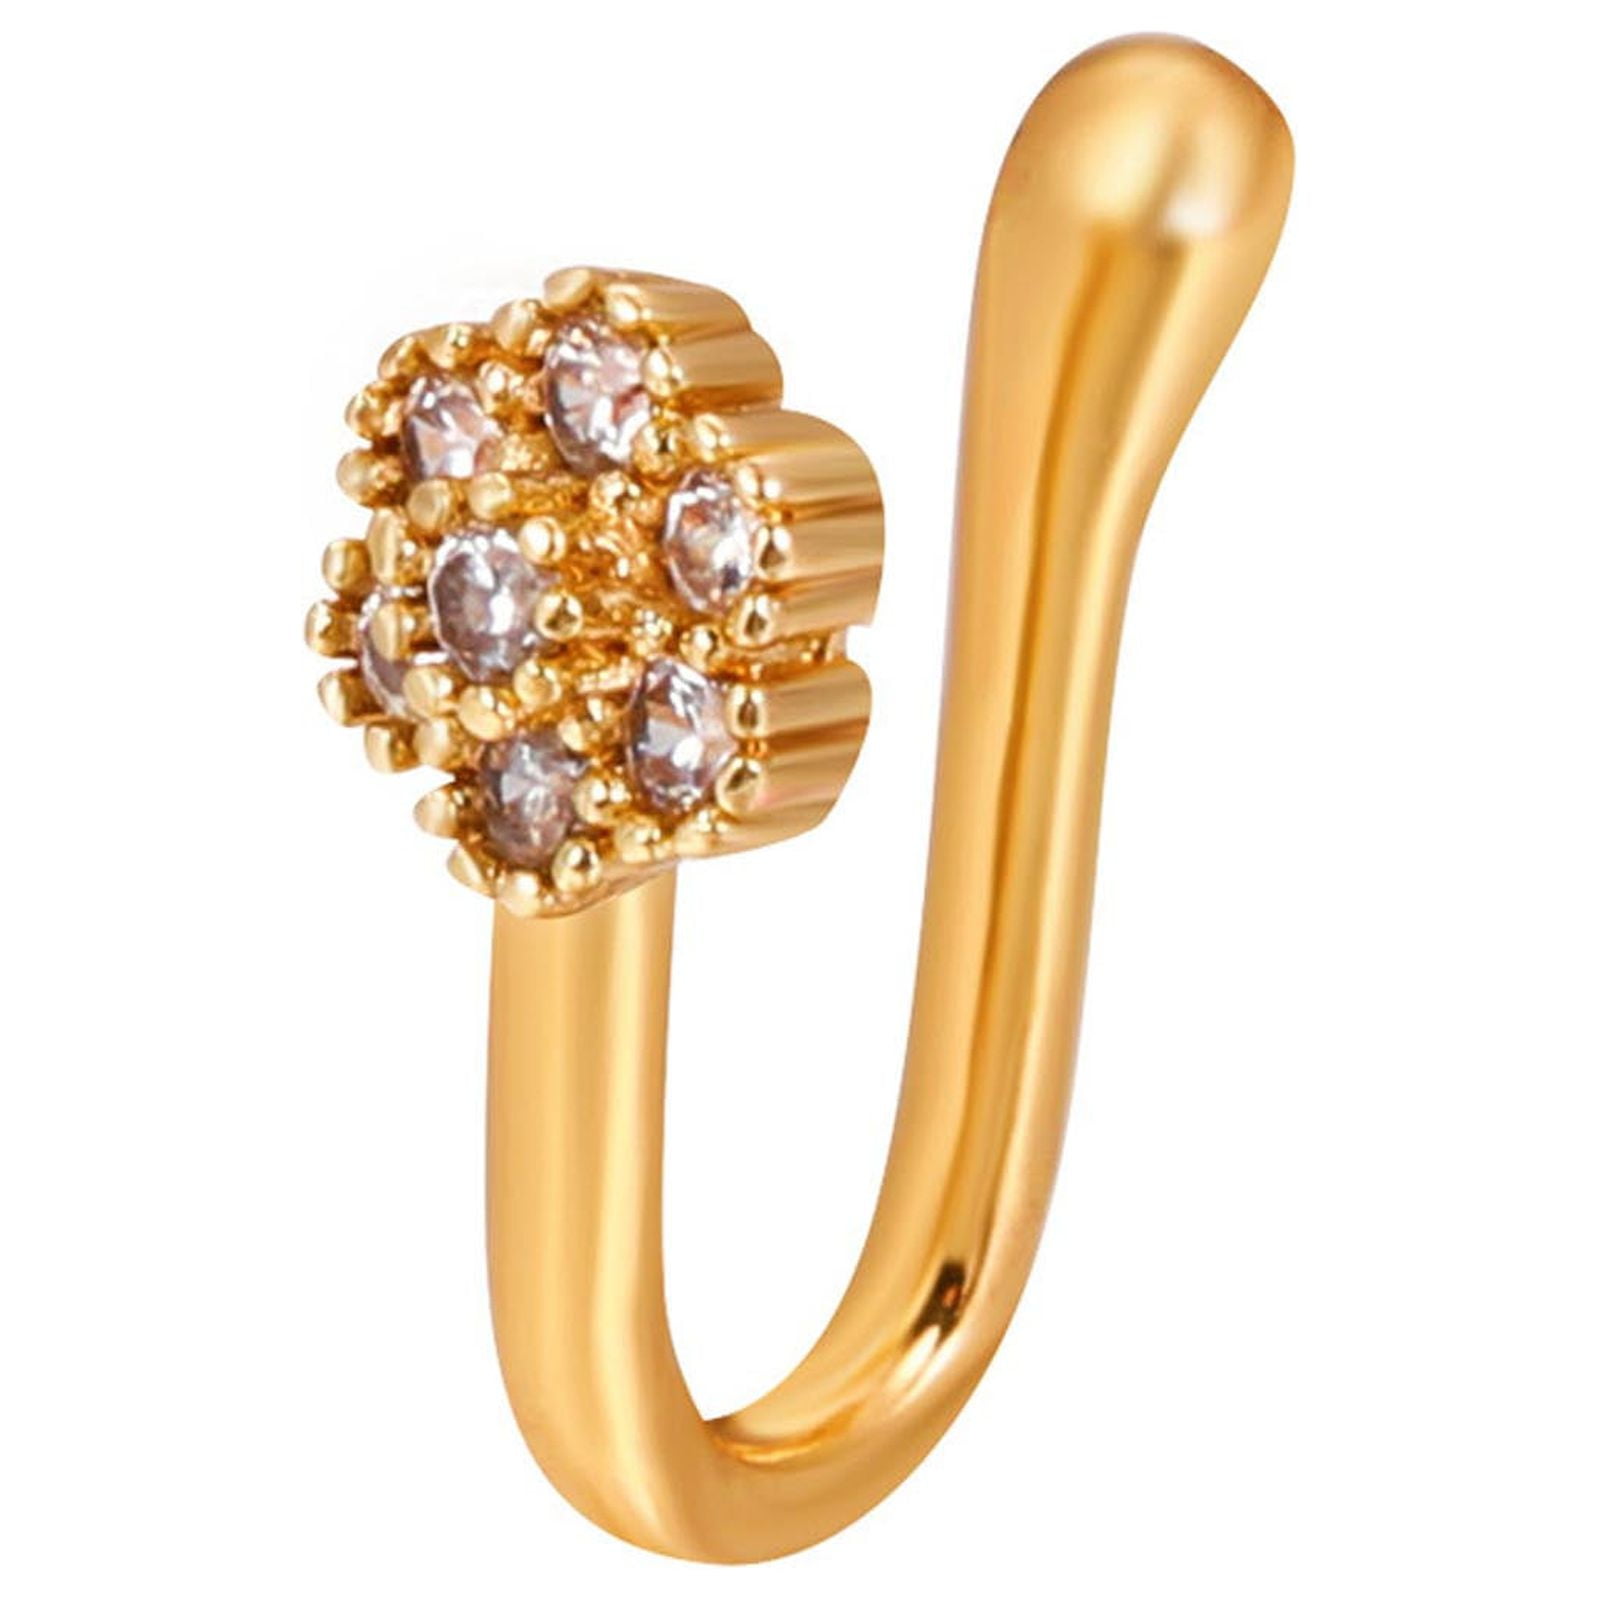 London blue topaz dress ring | Trillion proposal ring | Contemporary  engagement ring | Irish design — eva dorney goldsmith | contemporary  handmade jewellery design